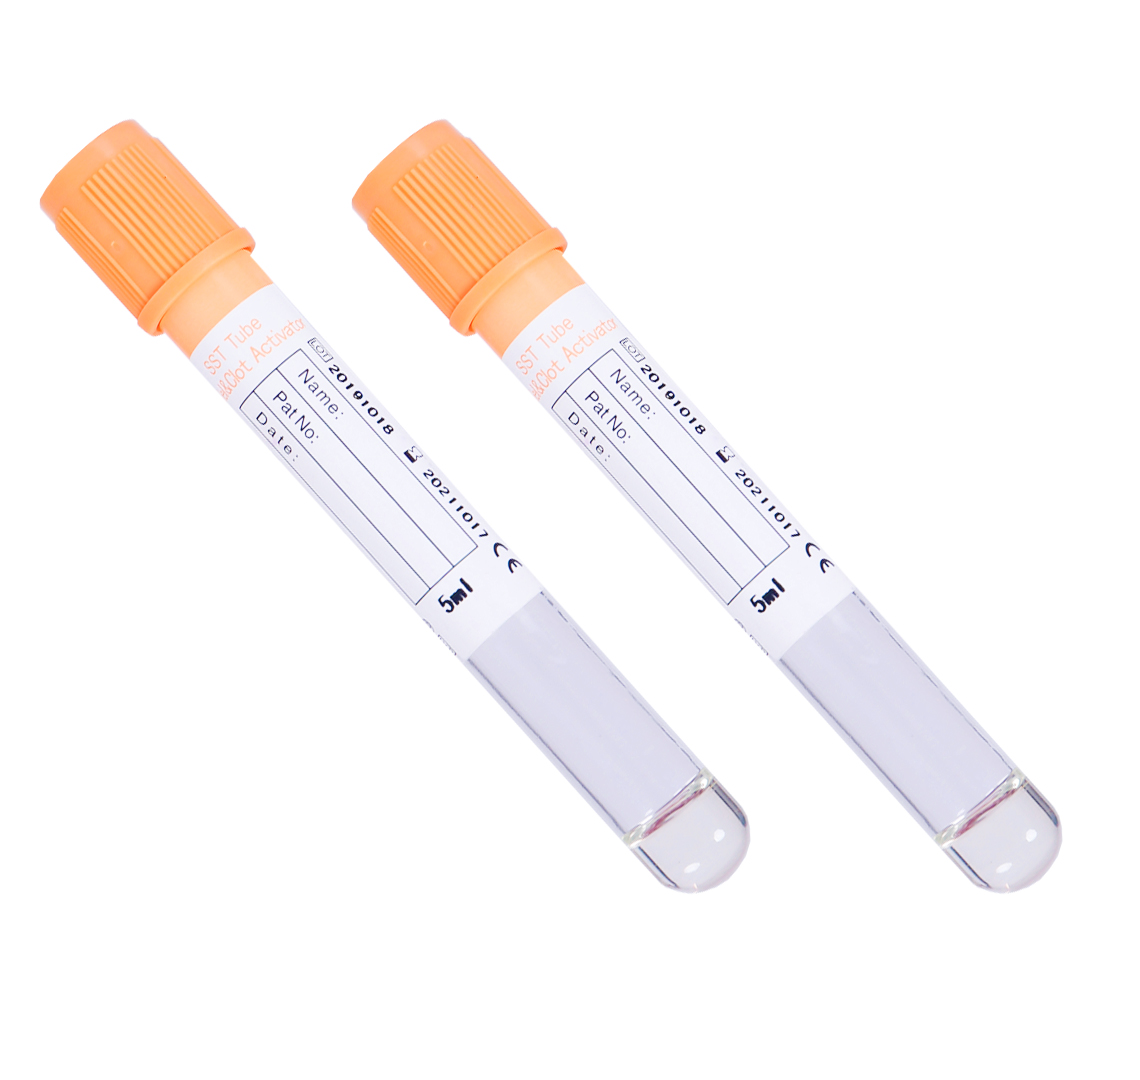 Separation gel - procoagulant tube (sterile)